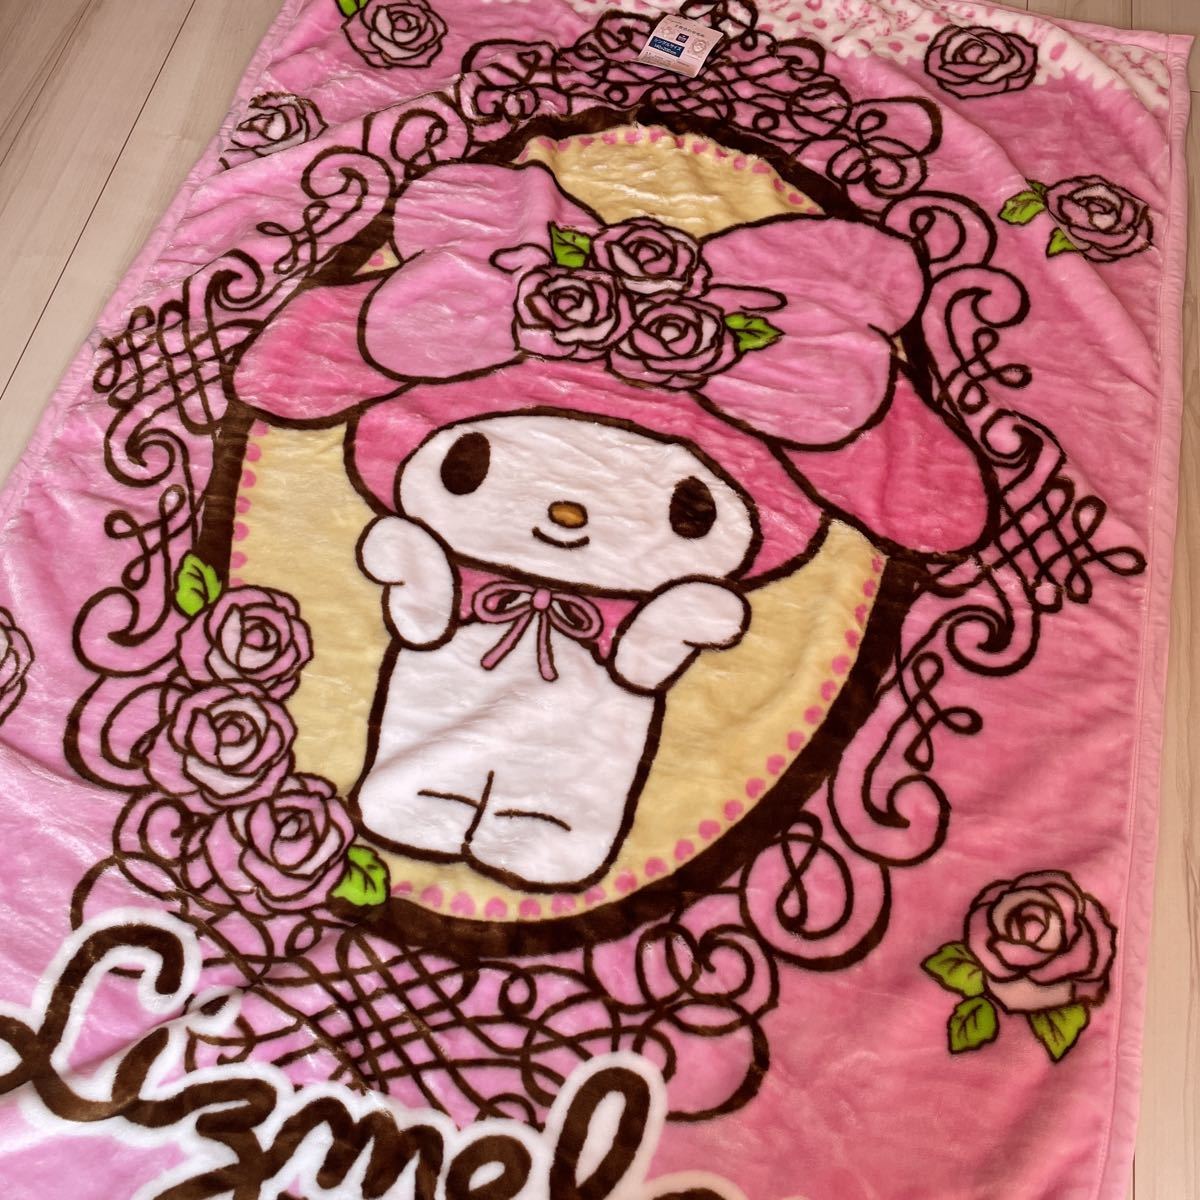  new goods * tag attaching * rare *lizmero*2 sheets join blanket * single size * blanket * my mero* Sanrio * futon * pink * rose 